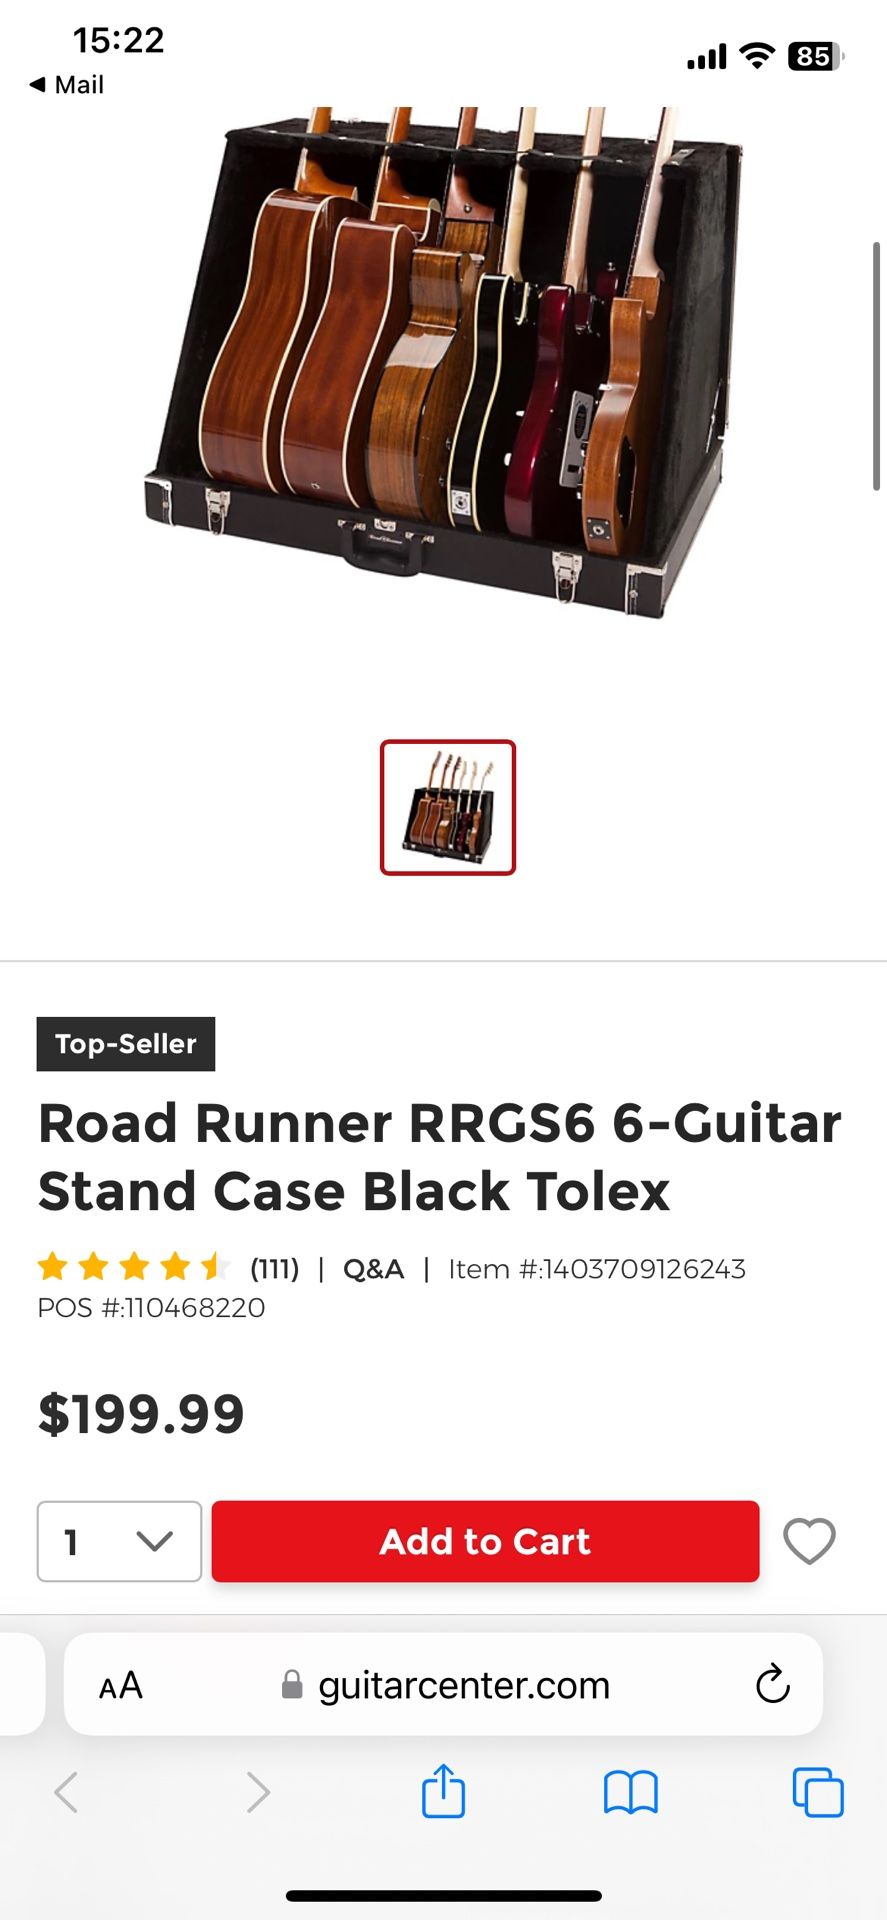 Road Runner RRGS6 6-Guitar Stand Case Black Tolex